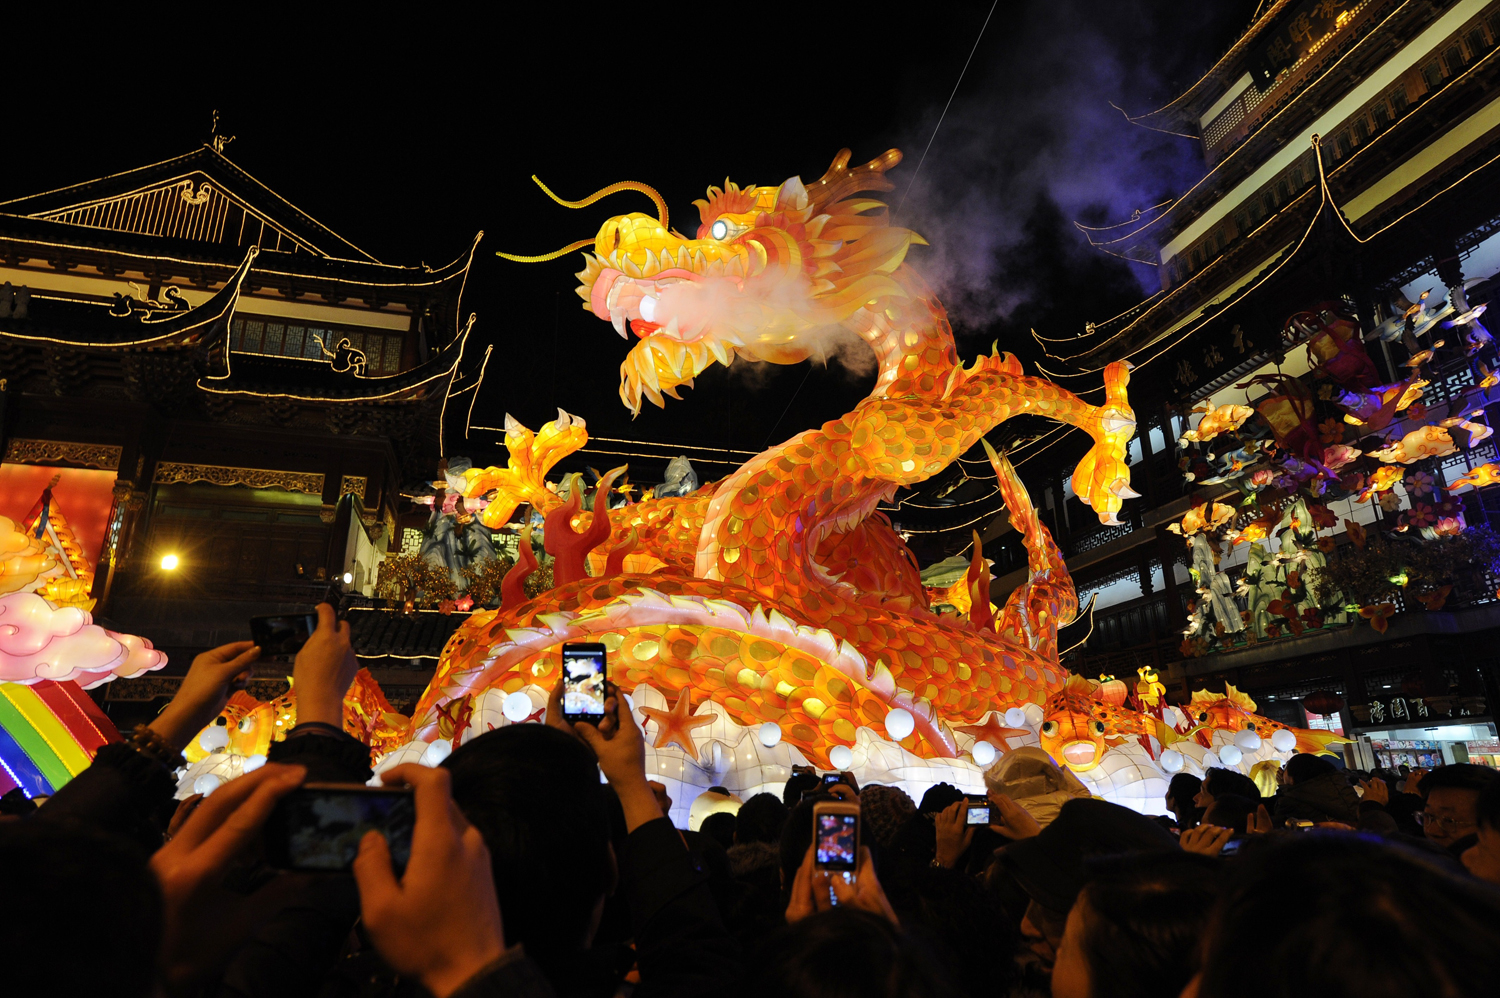 Китайцы празднуют. Китайский новый год (Chinese New year). Новый год в Китае. Праздник дракона в Китае. Китайский новый год дракон.